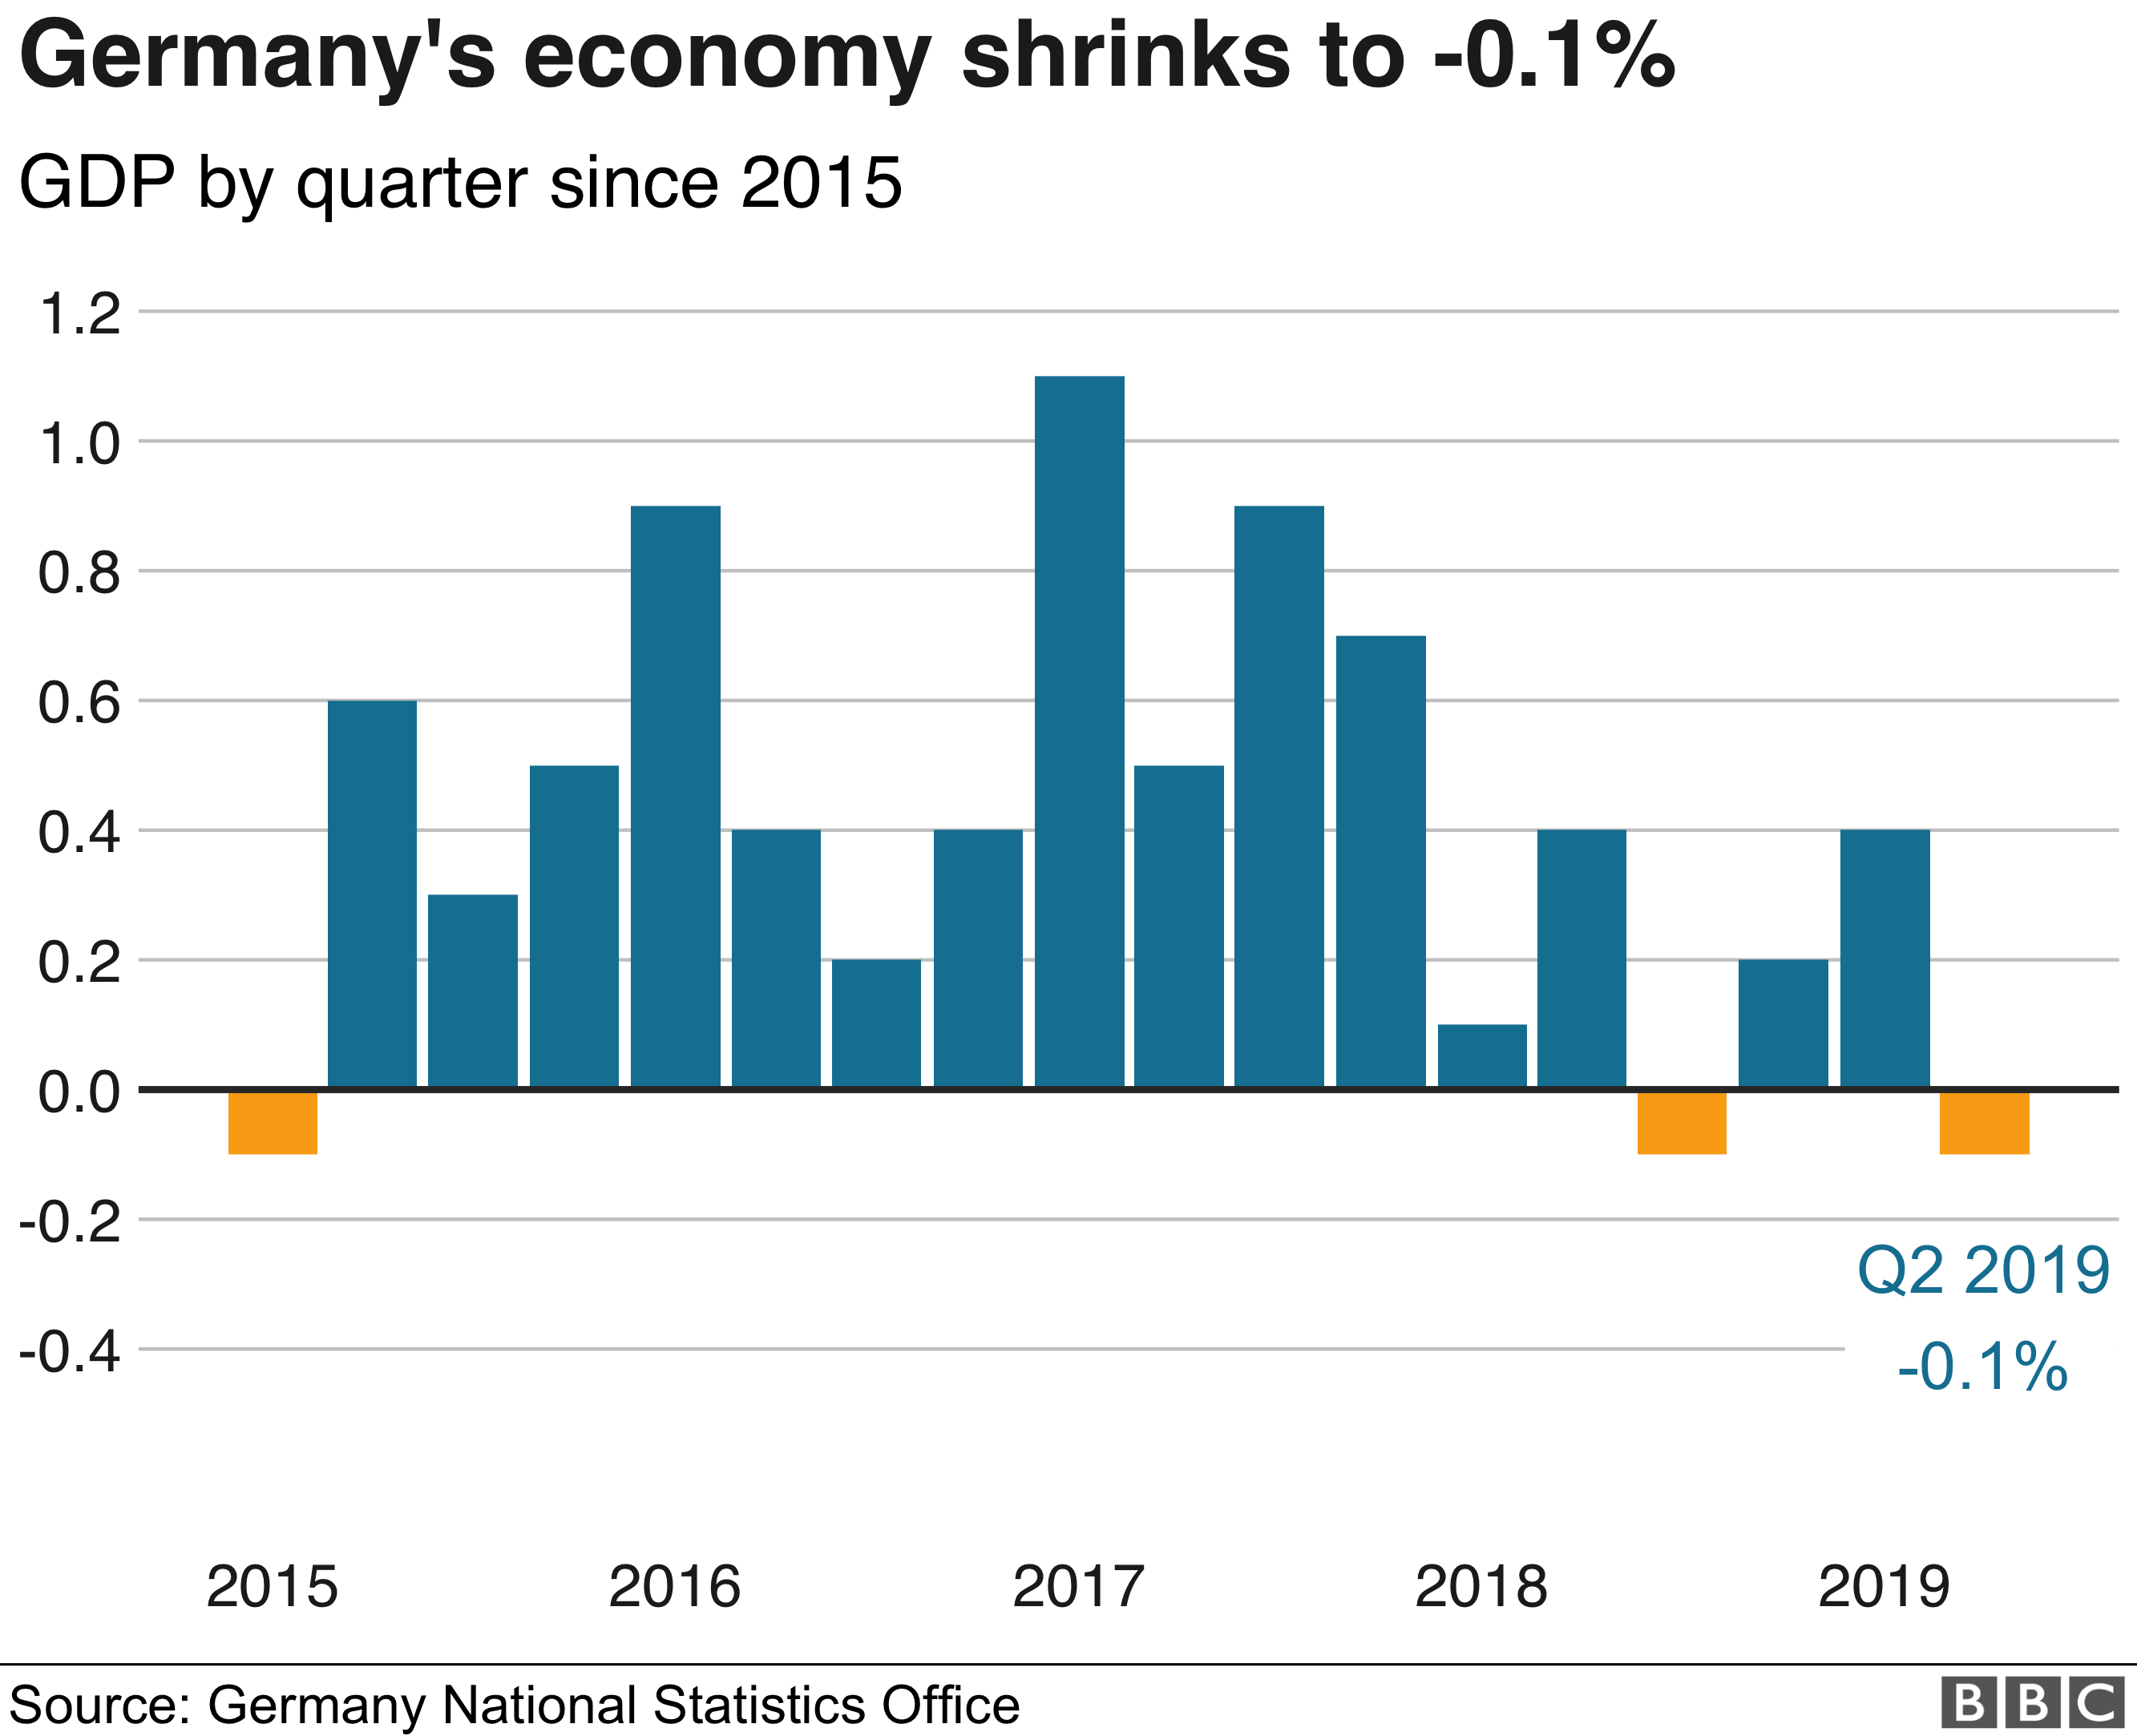 Germany's economy shrinks by 0.1% in Q2 2019